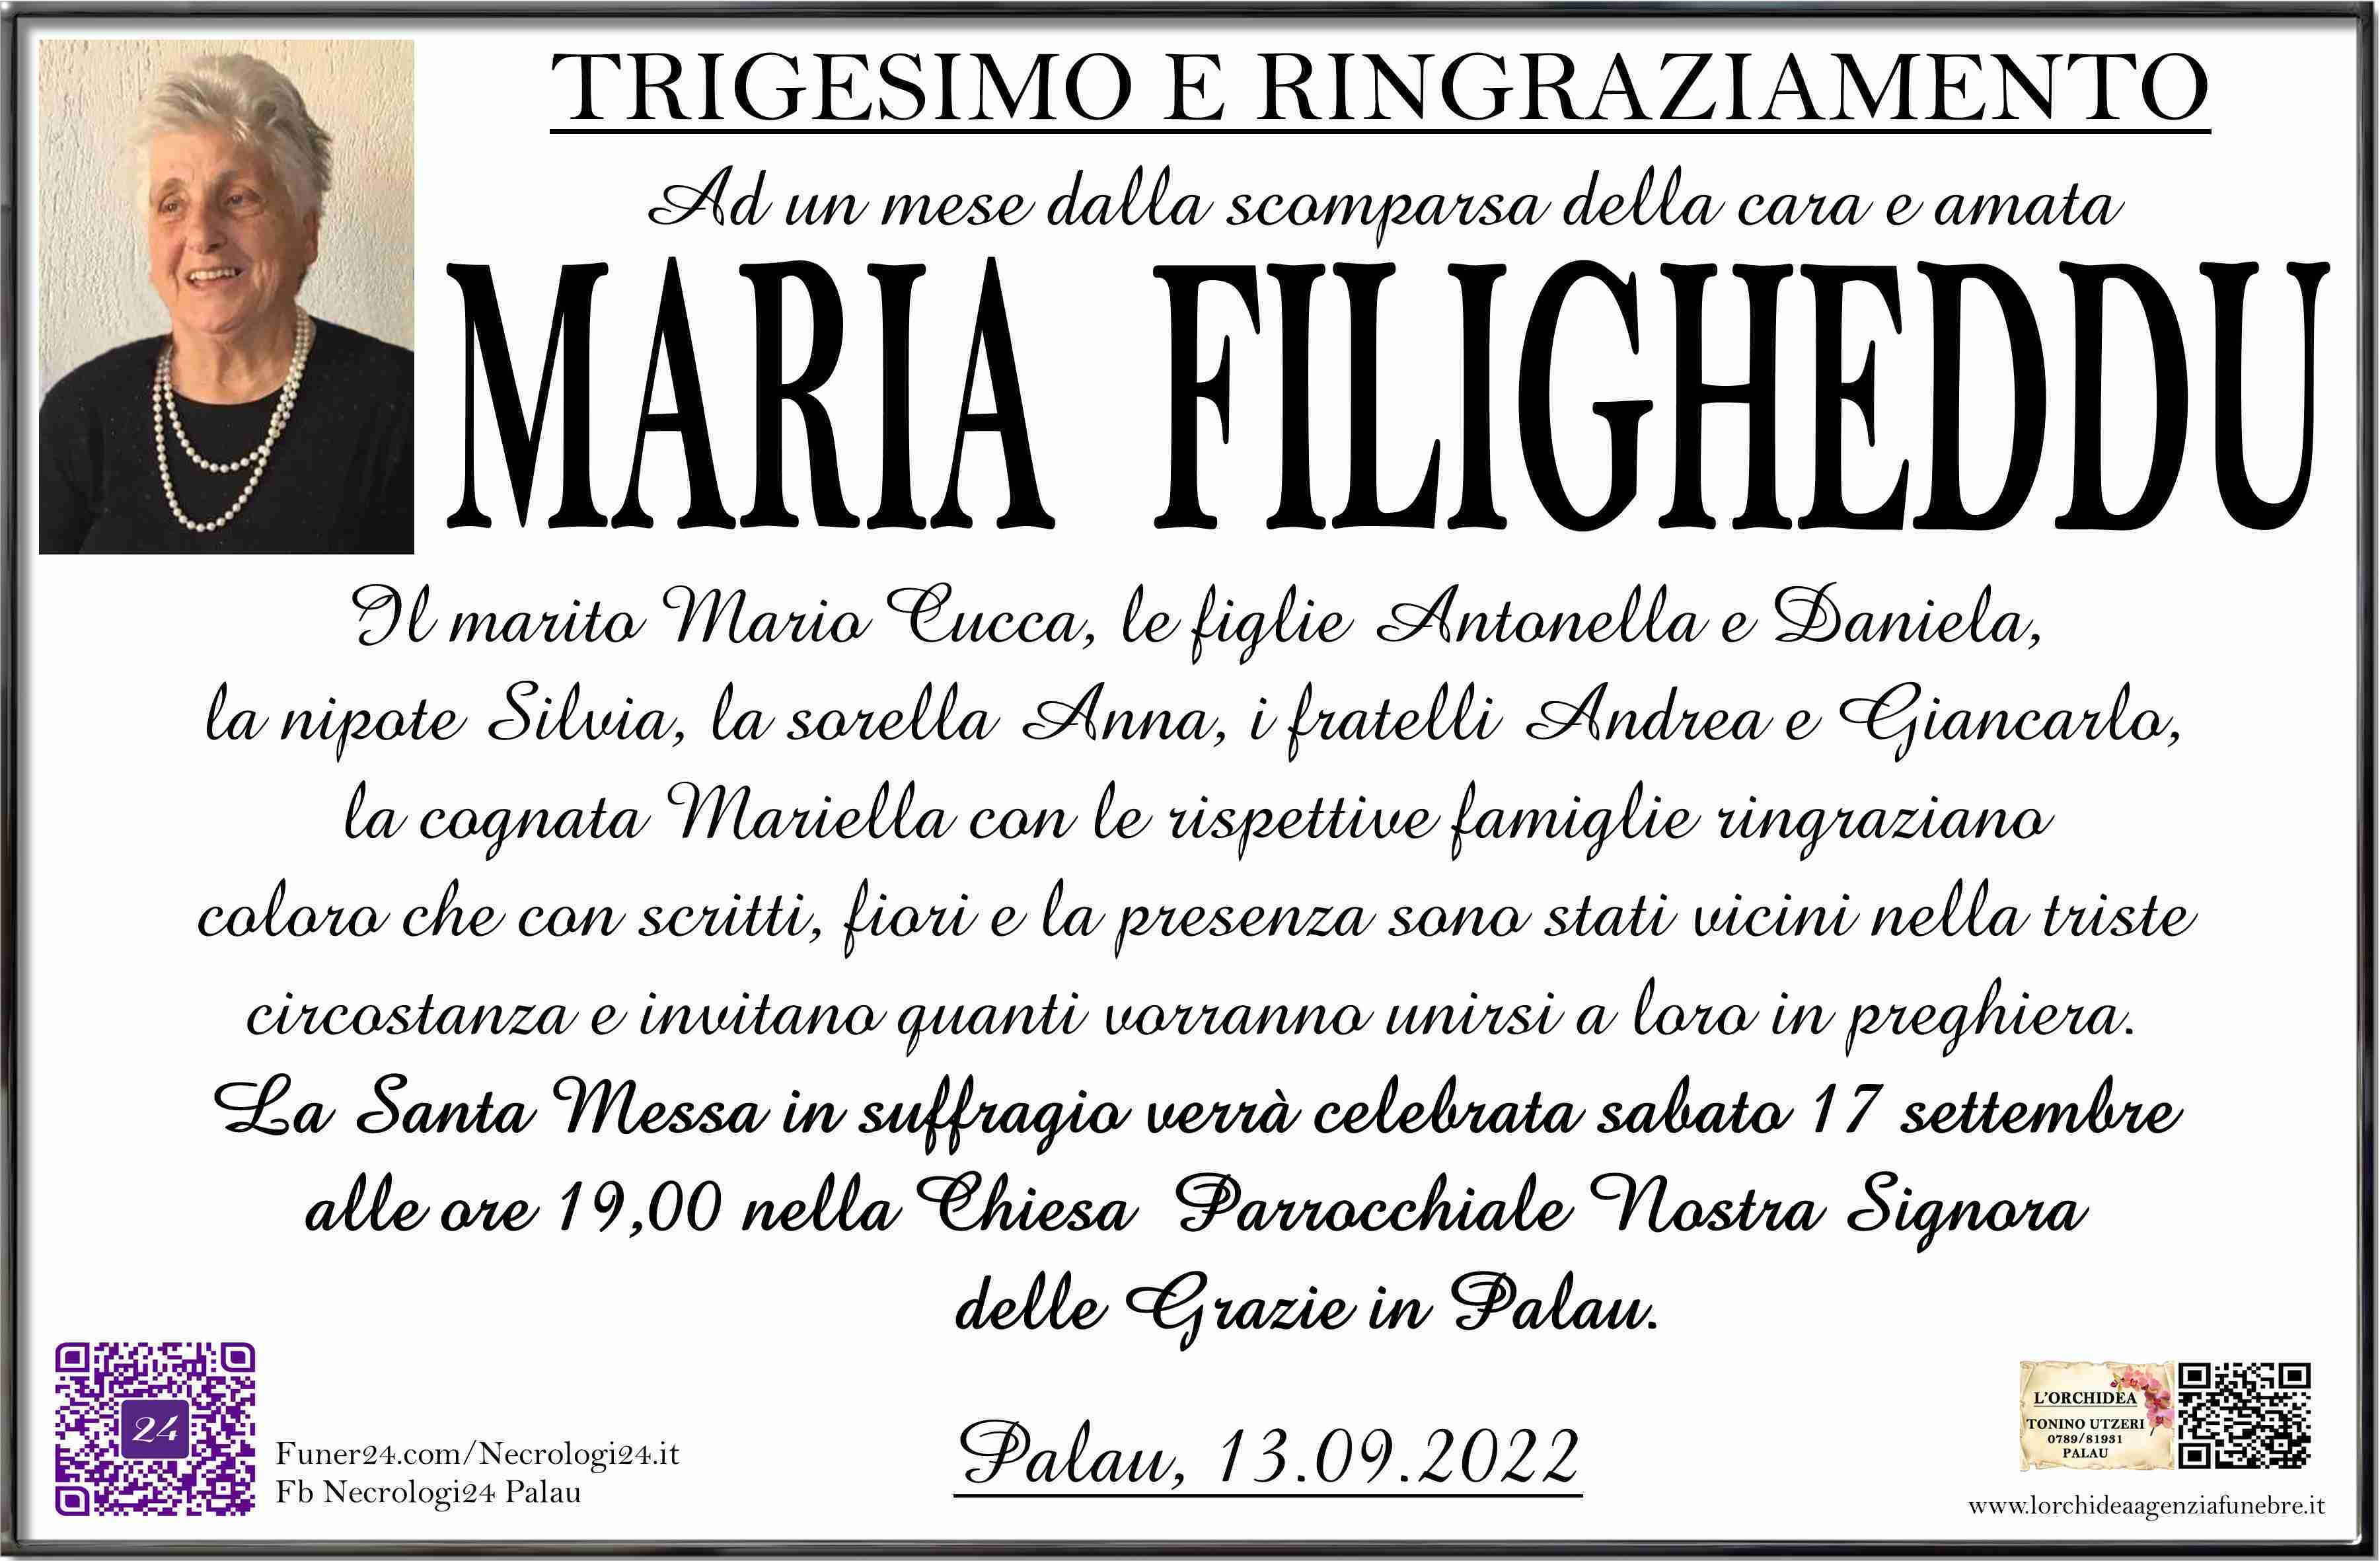 Maria Filigheddu